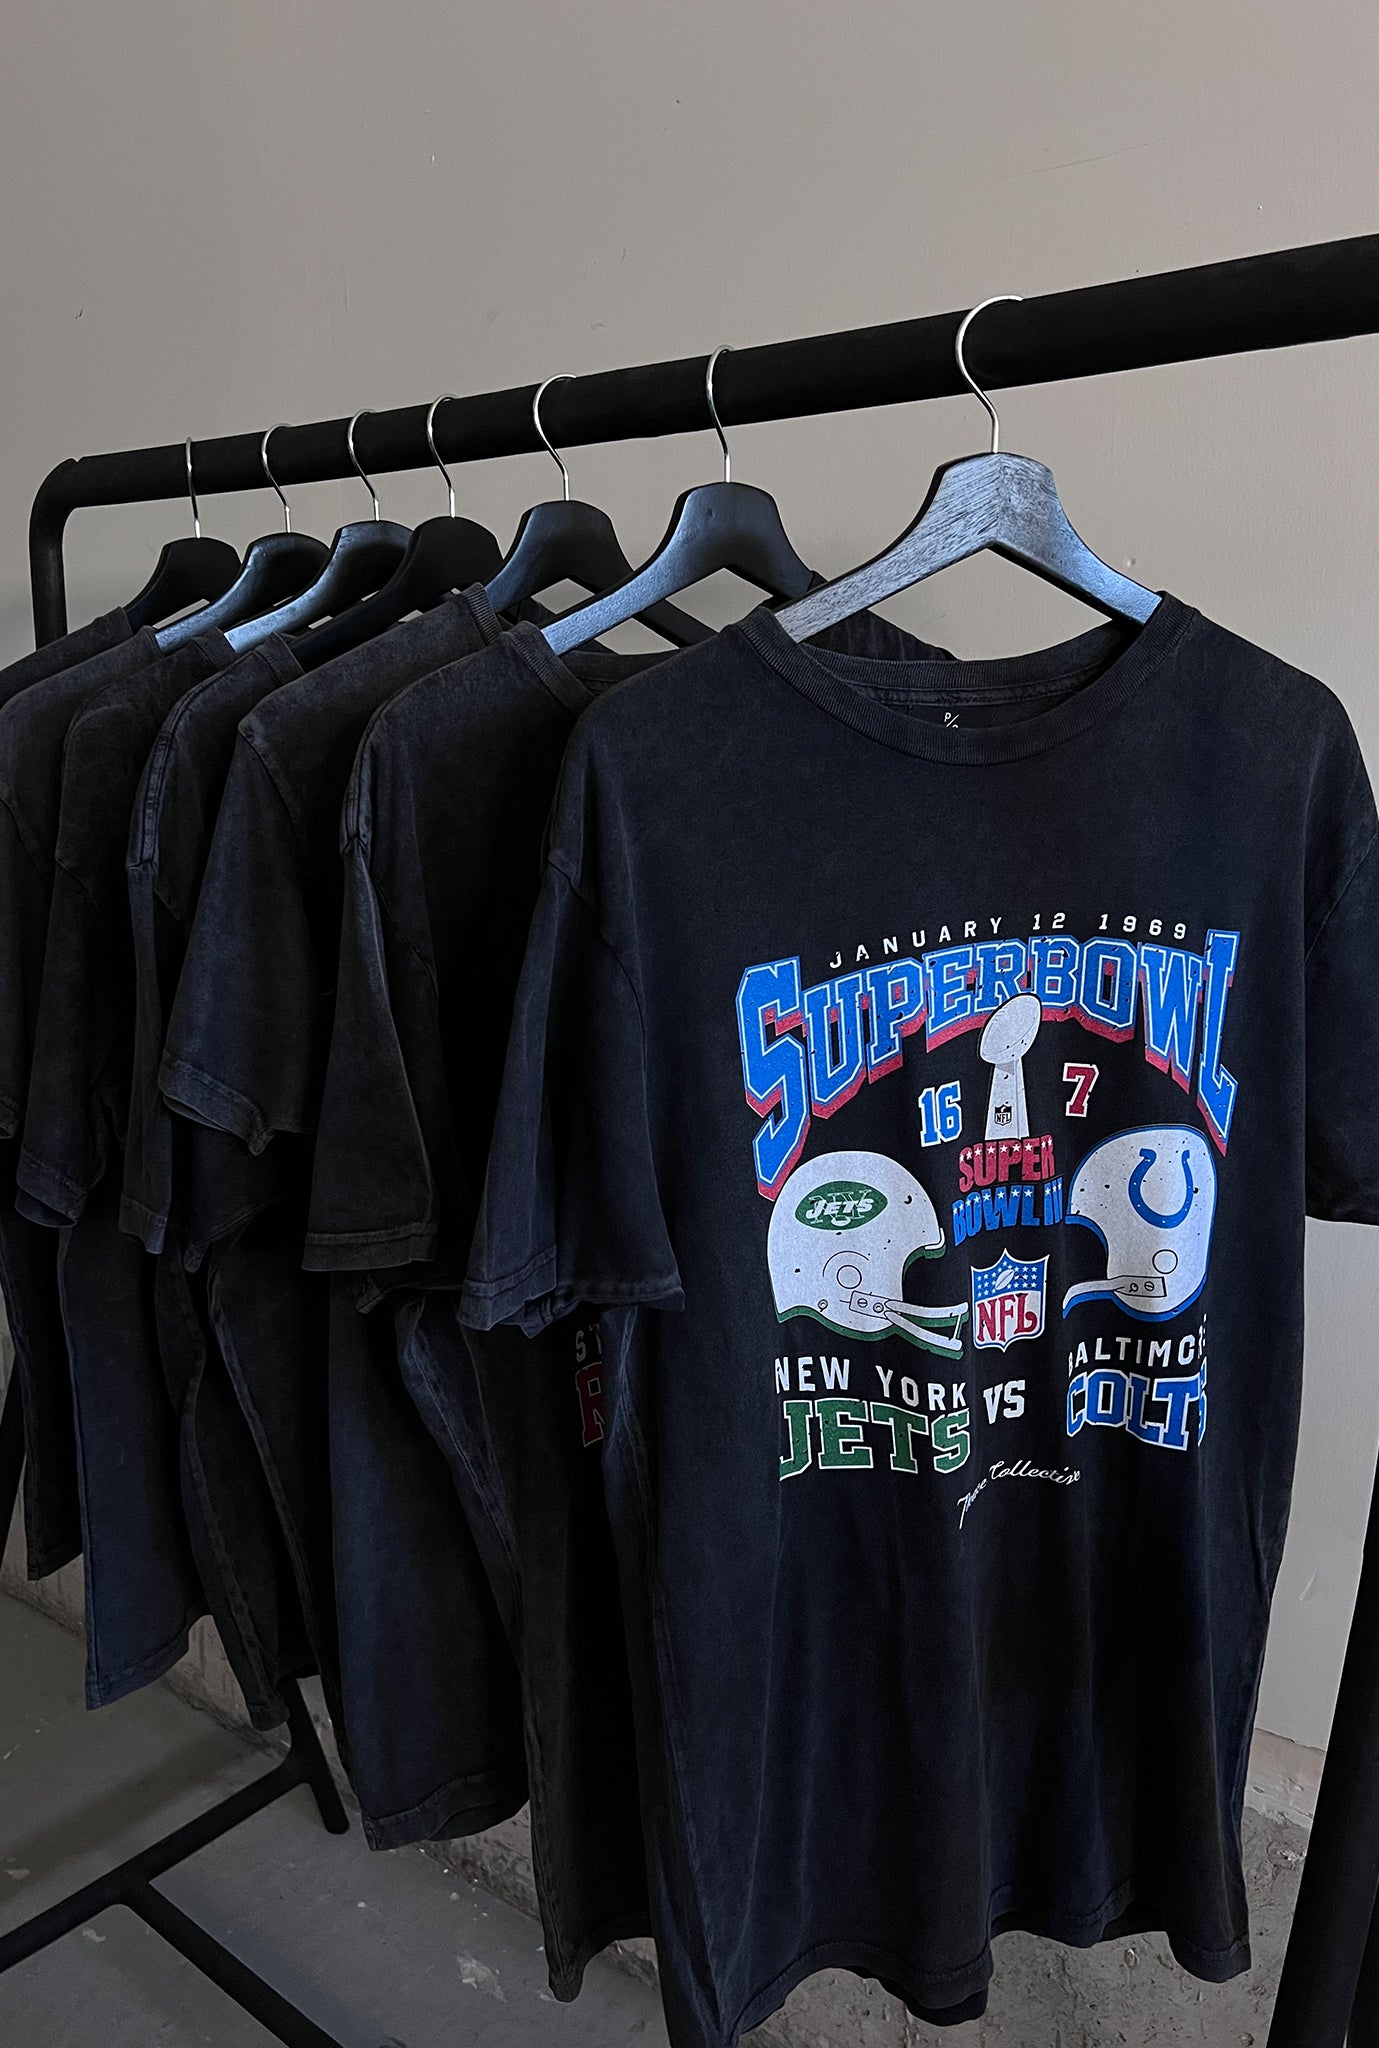 Super Bowl III: New York Jets vs. Baltimore Colts Stonewashed T-Shirt - Black